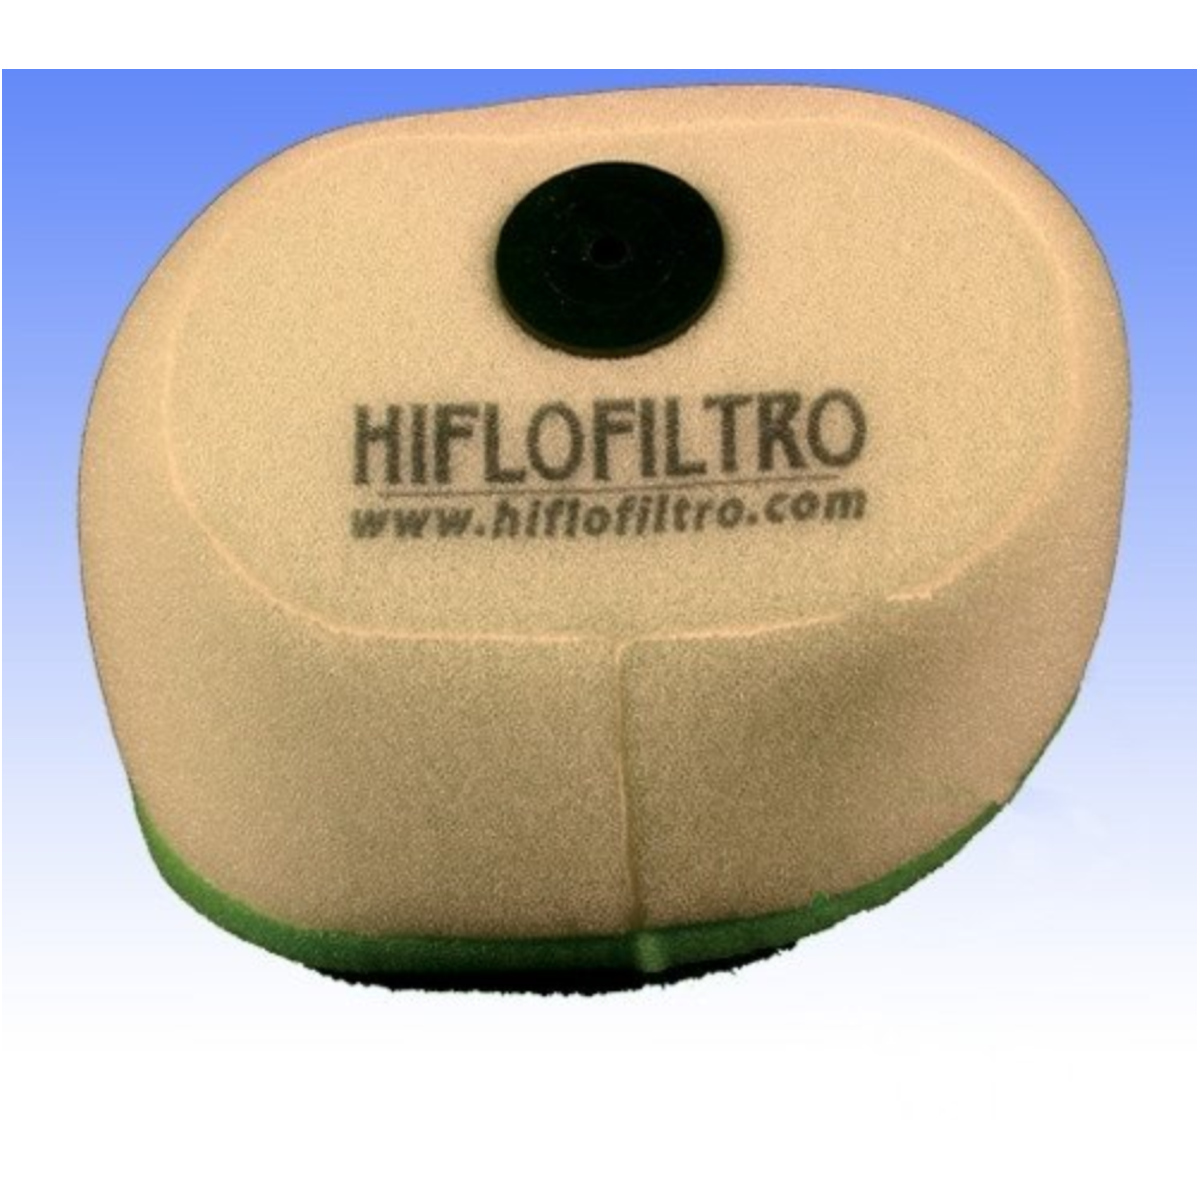 Hiflo hff2014 luftfilter foam hiflo von HIFLO